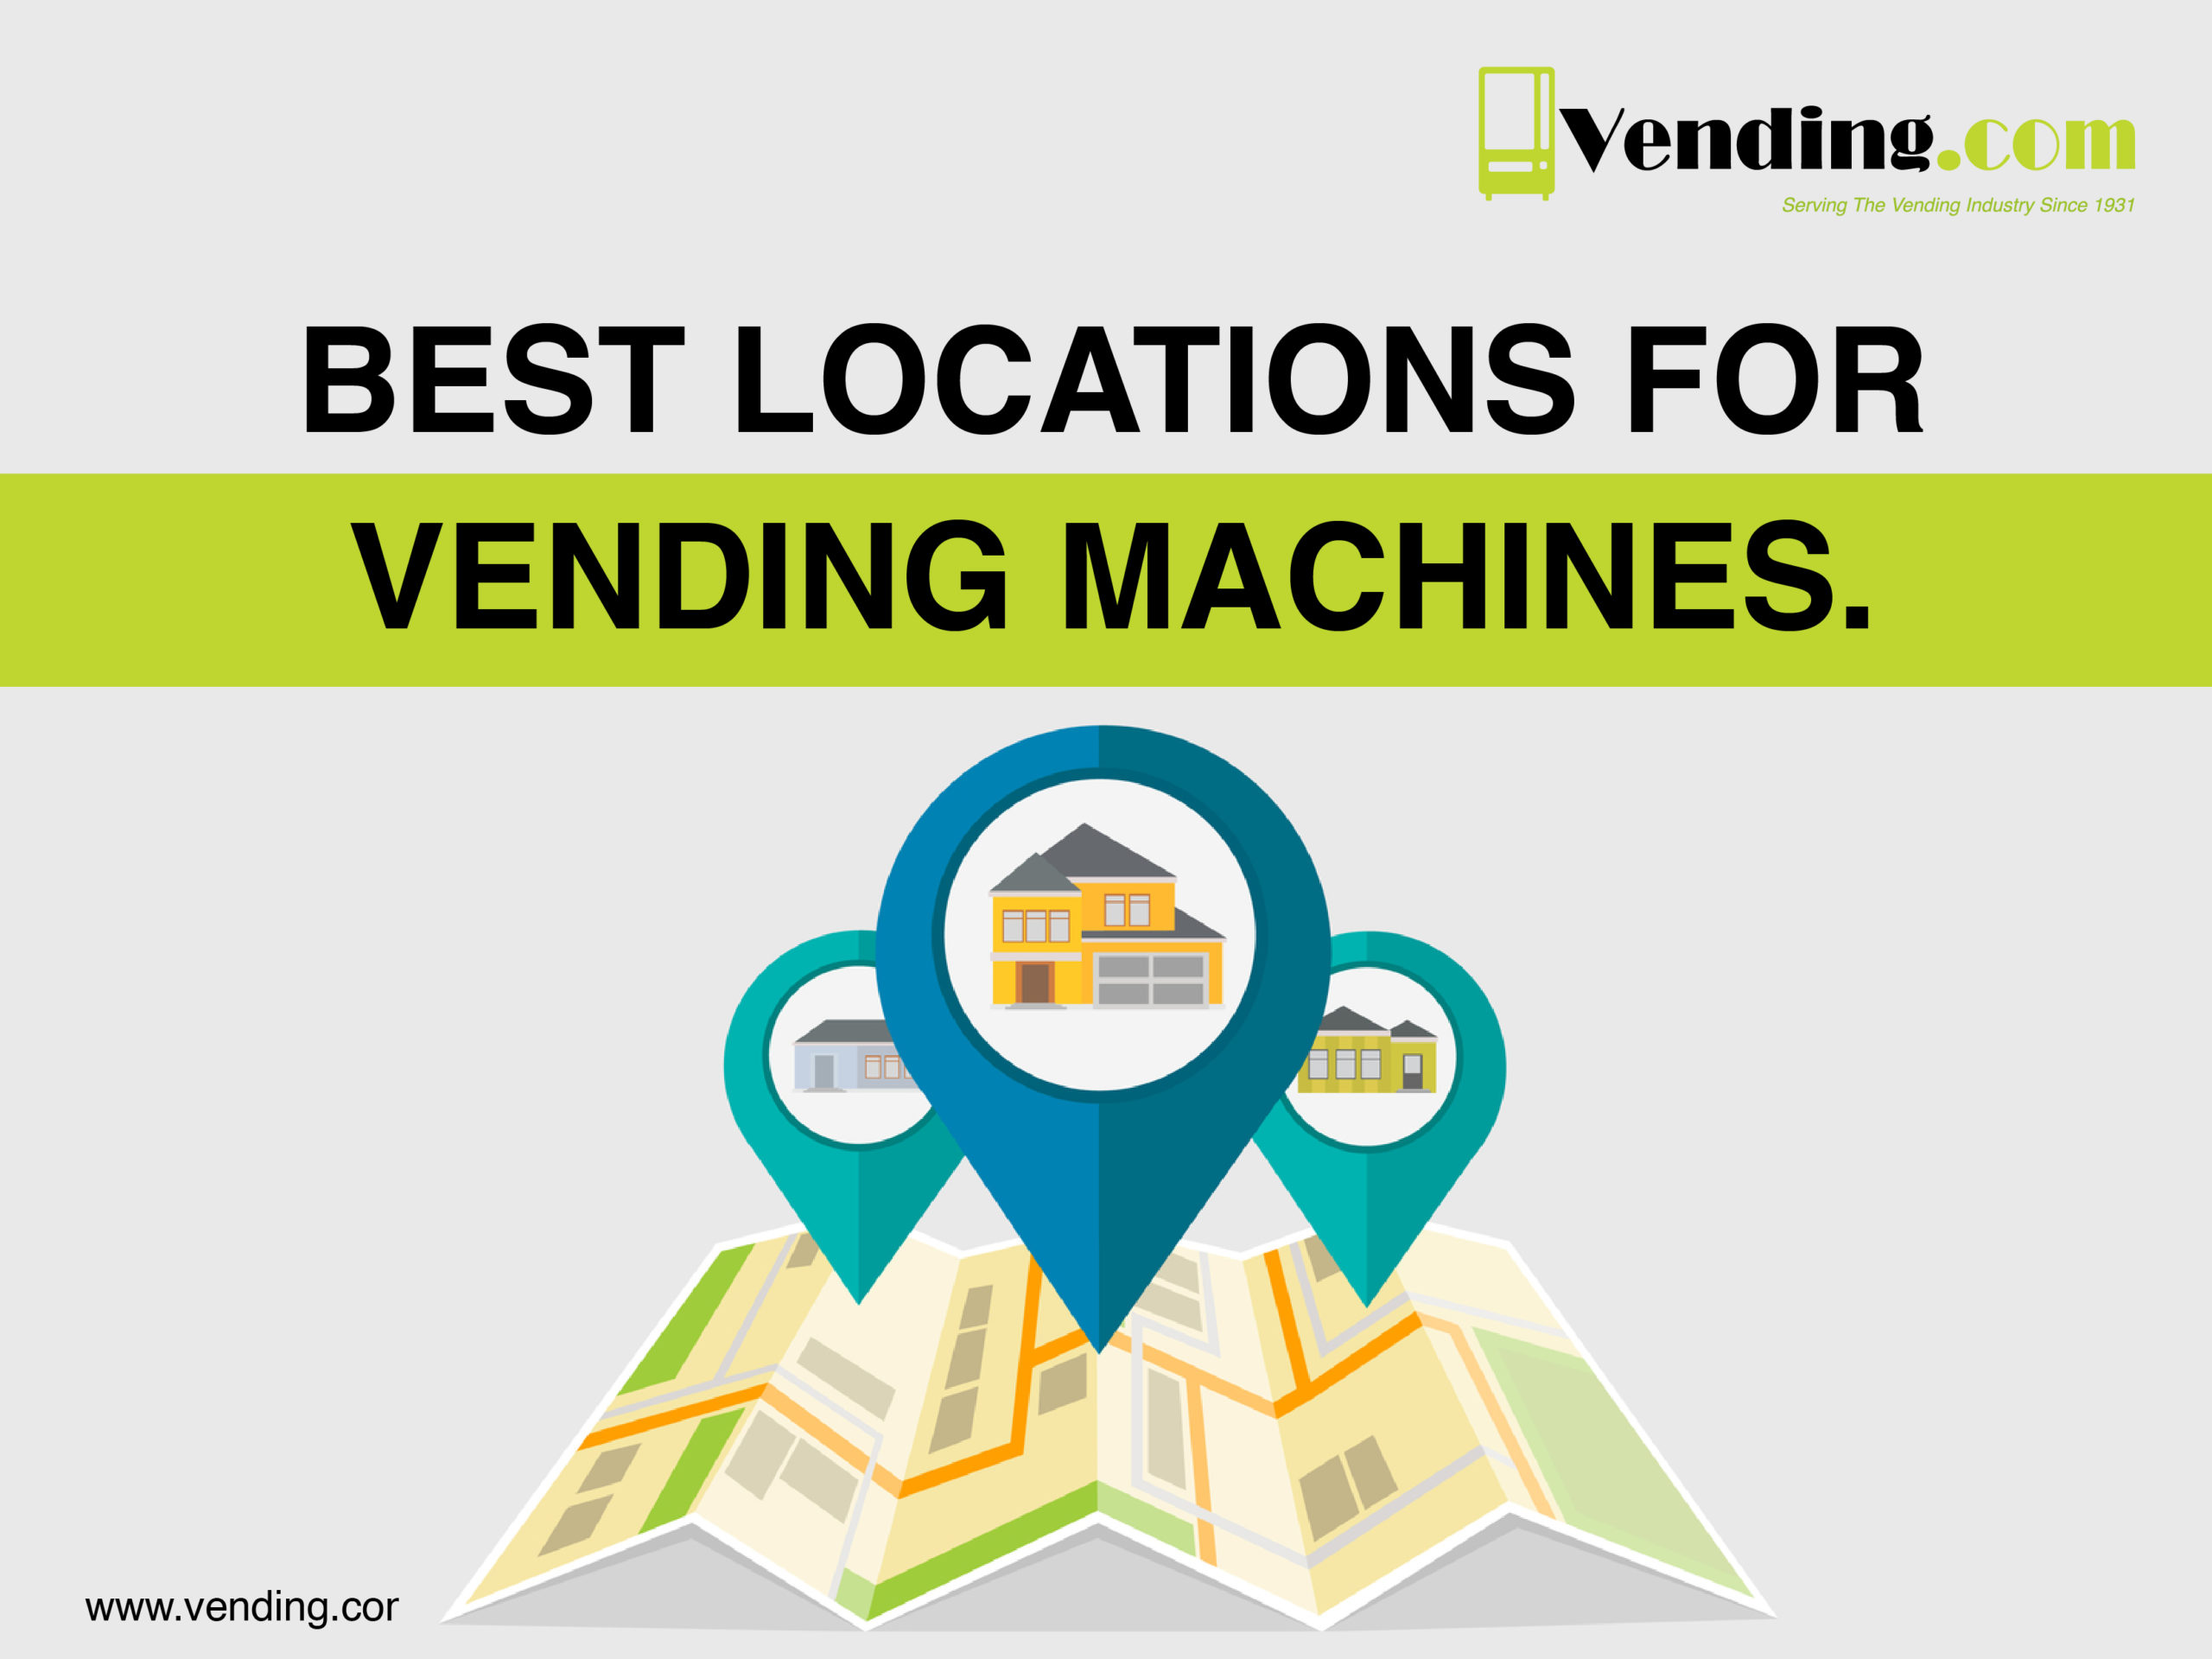 Vending.com - The Best Locations for Vending Machines